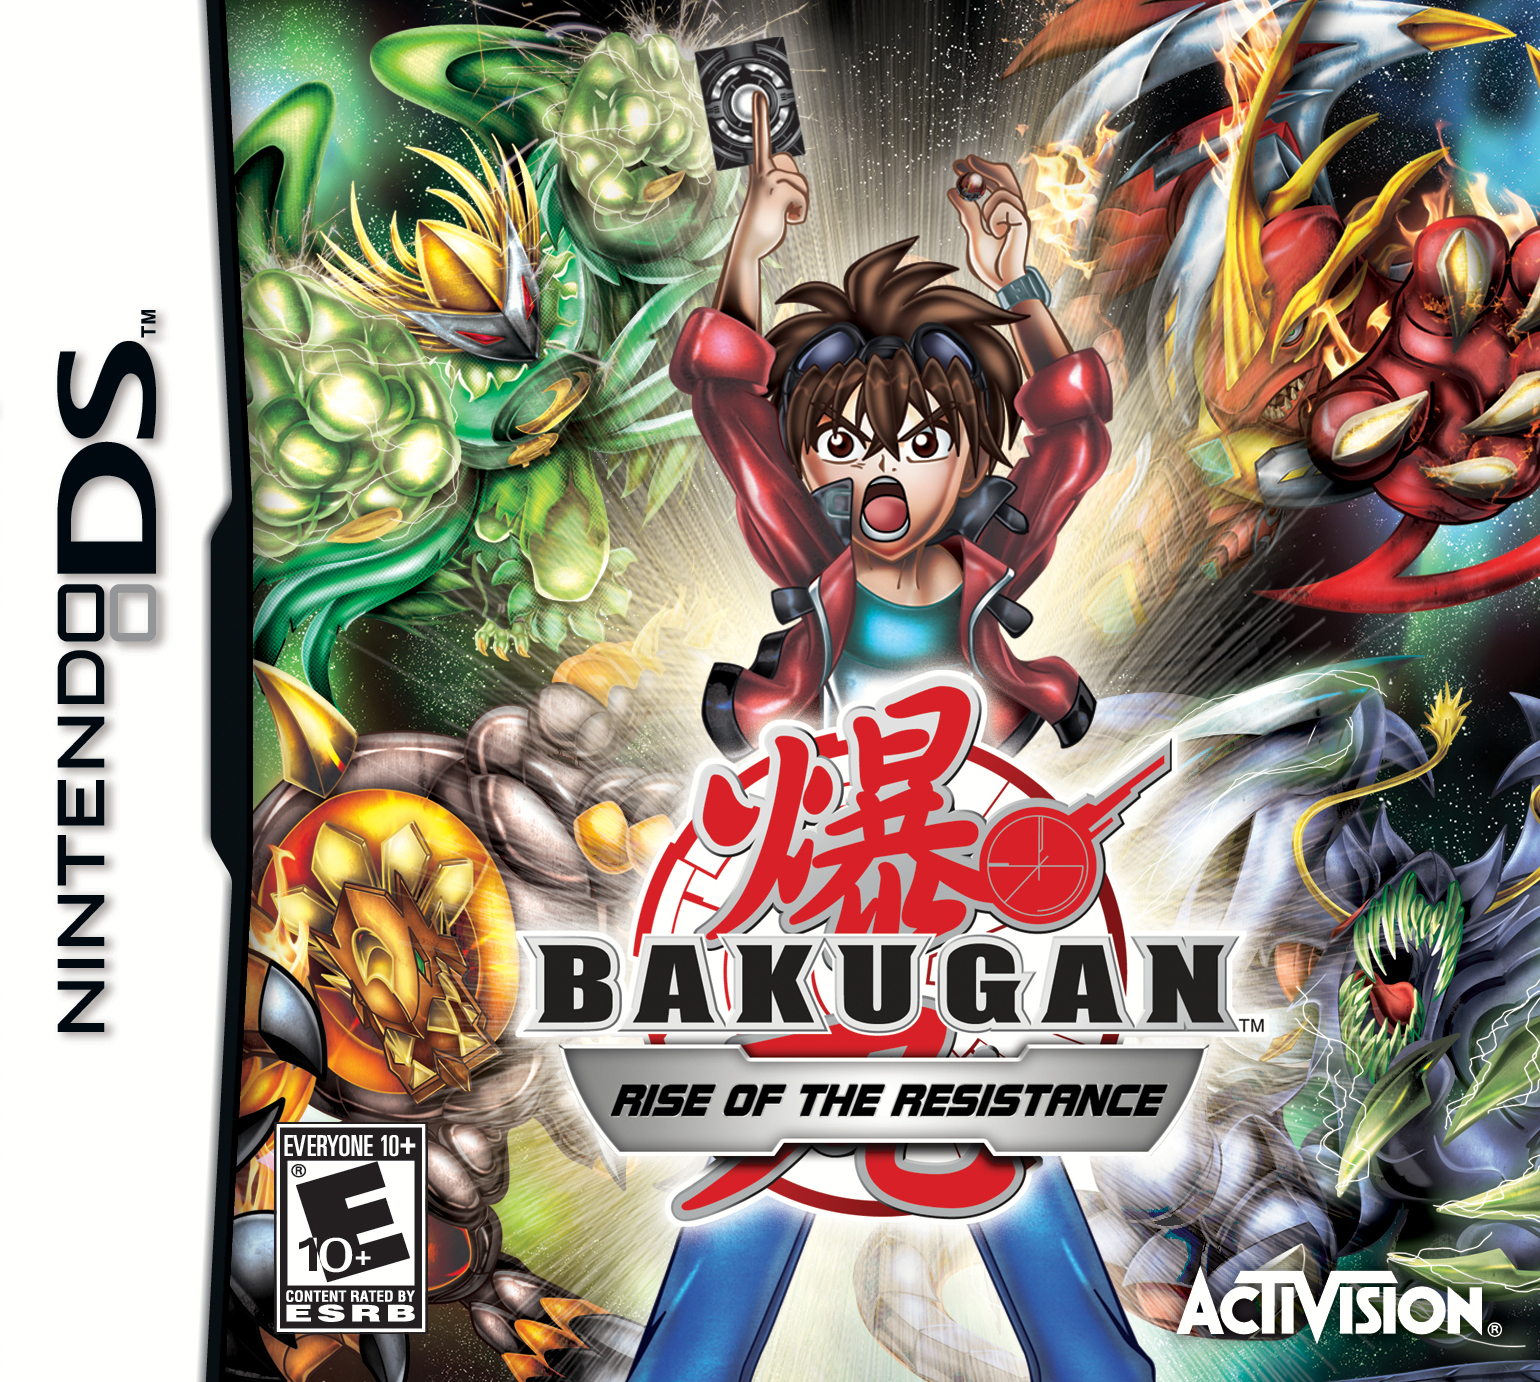 Bakugan Battle Brawlers Preview - Preview - Nintendo World Report